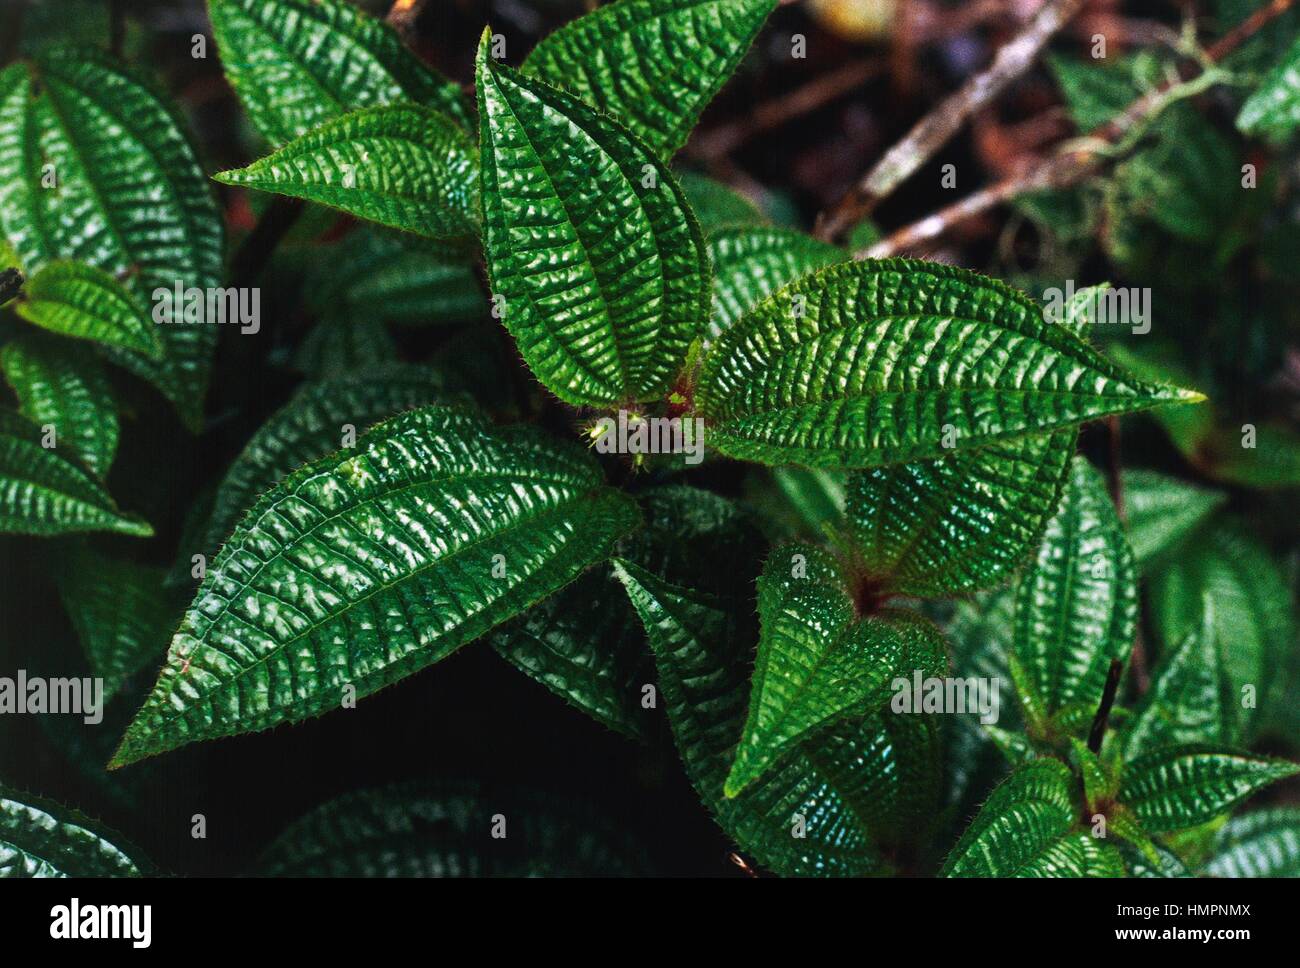 Soapbush or Koster's Curse (Clidemia hirta), Melastomataceae, Madagascar. Stock Photo